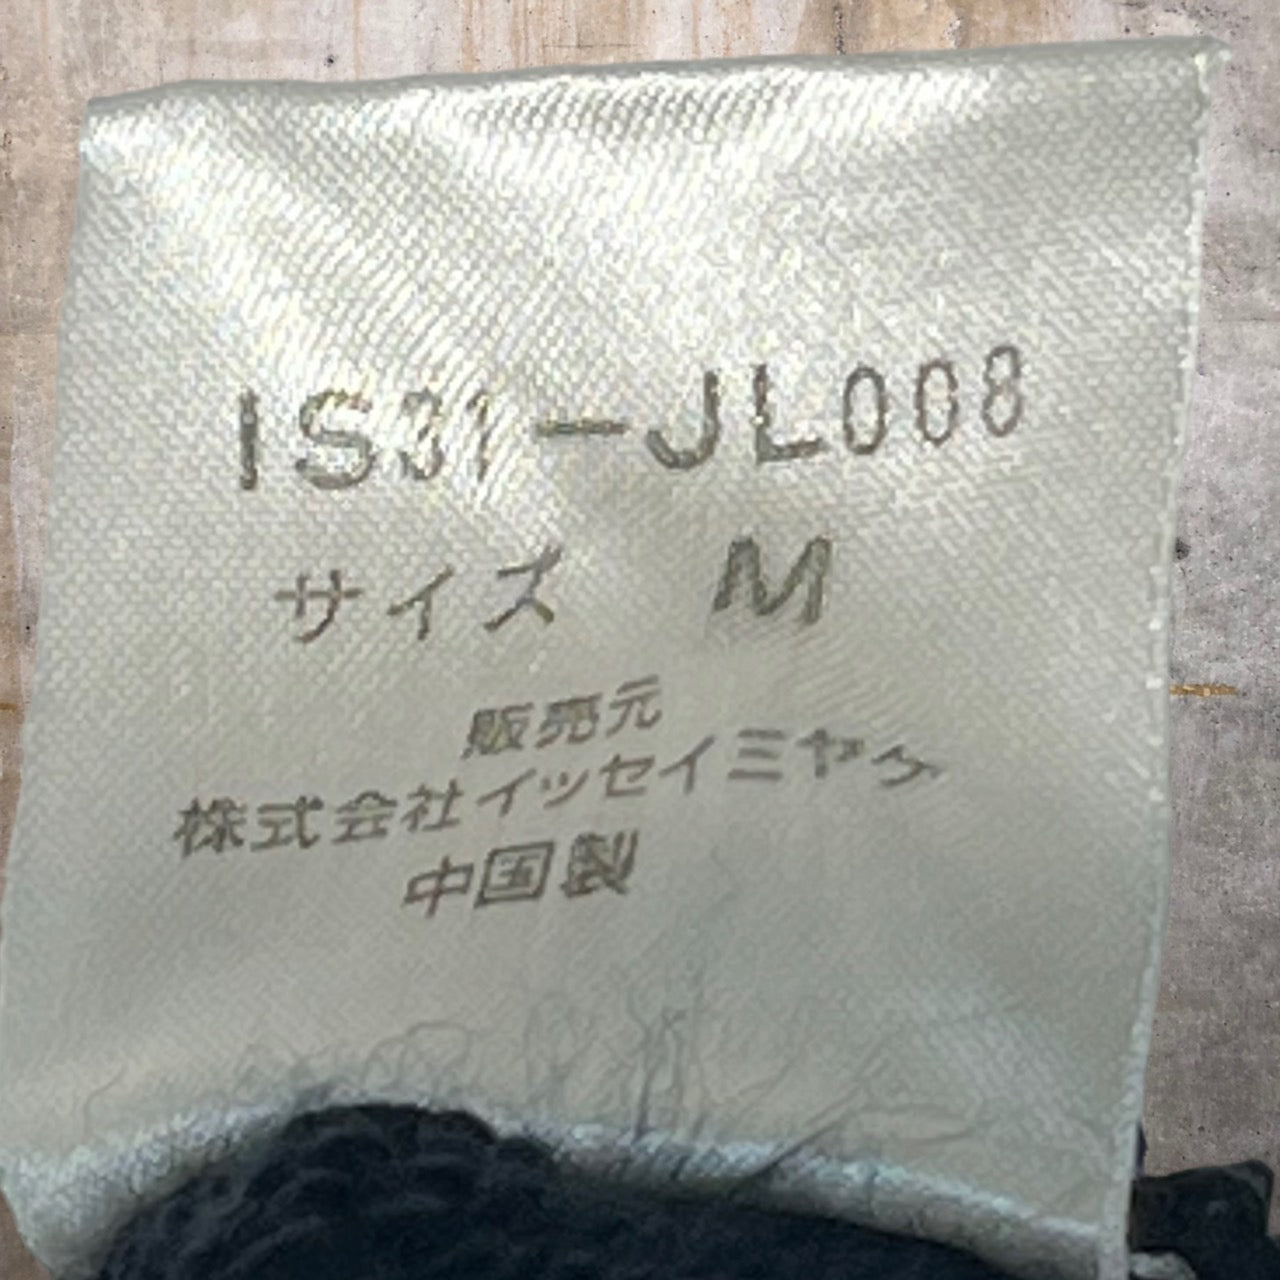 i.s. ISSEY MIYAKE(アイエス イッセイミヤケ) 90's”i.s.”backl logo stitch  sweat/バック刺繍ロゴステッチスウェット IS31-JL008 M ブラック 90年代 ヴィンテージ